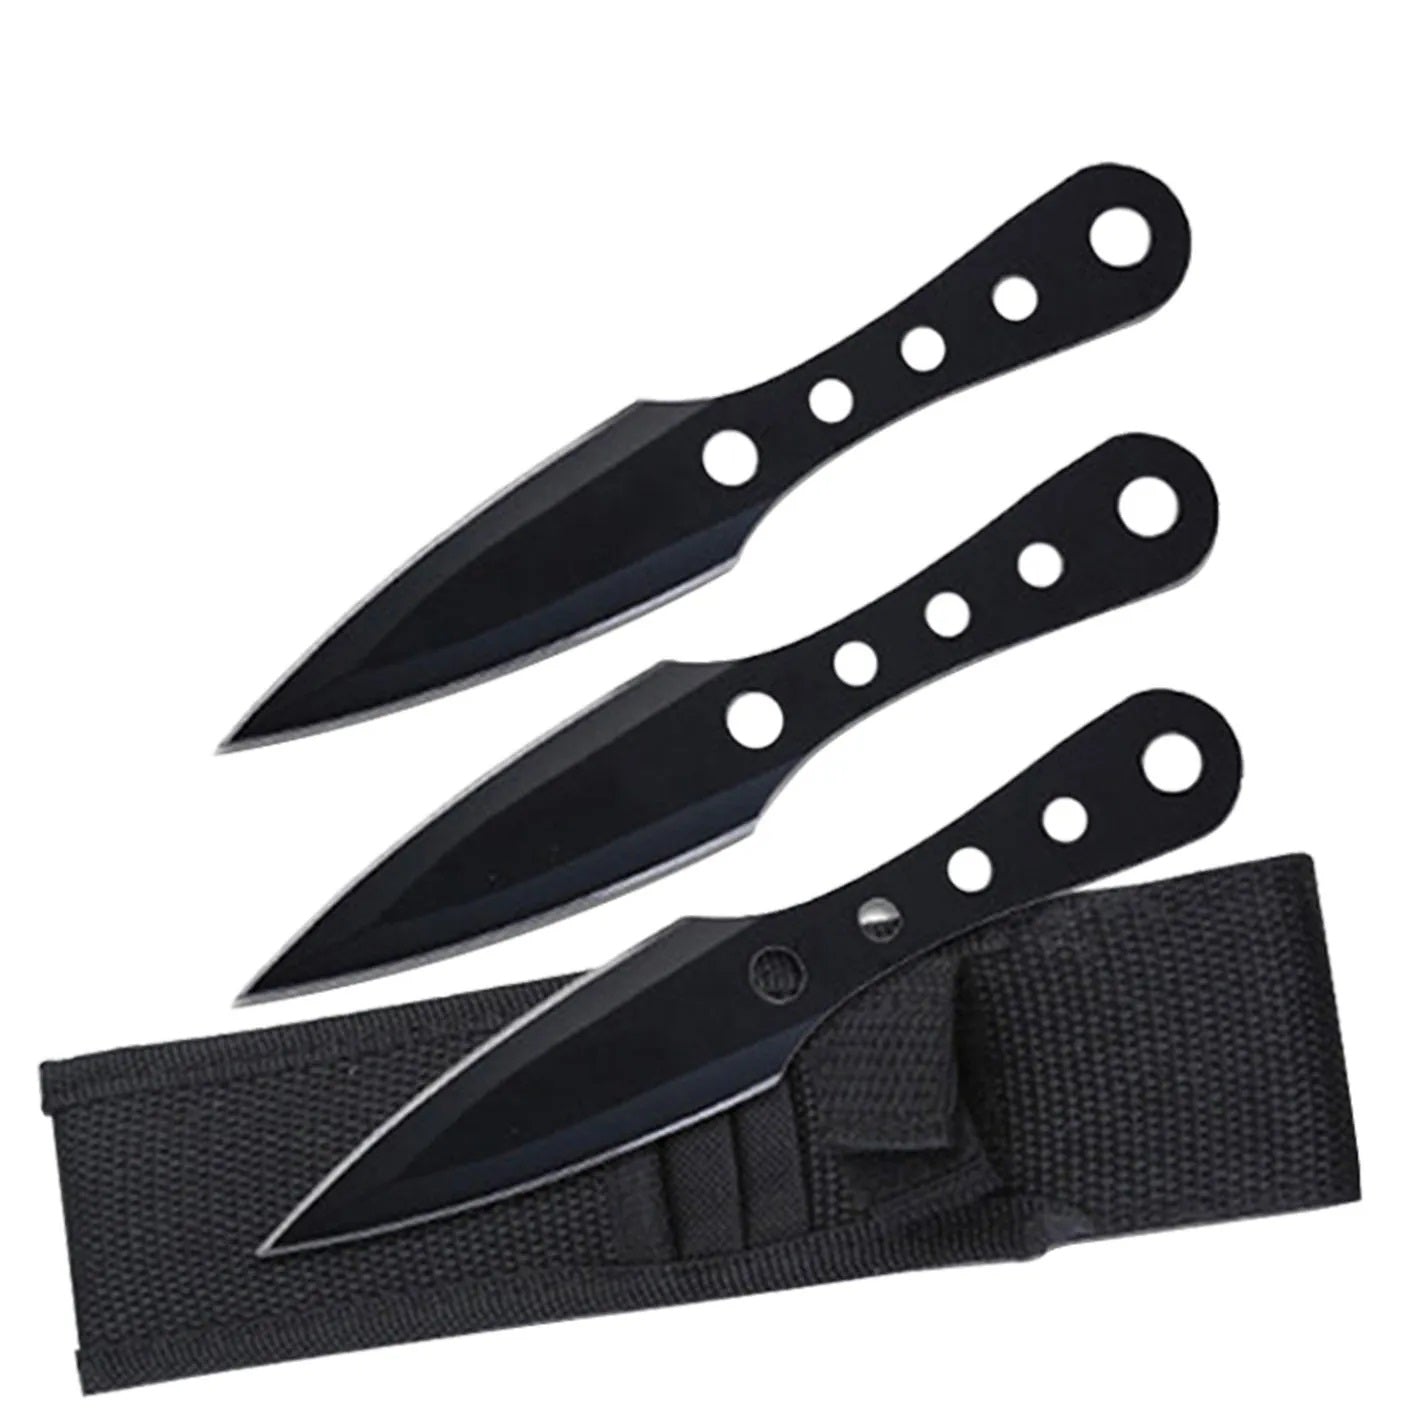 6" Throwing Knife 3PC Set W/Nylon Sheath